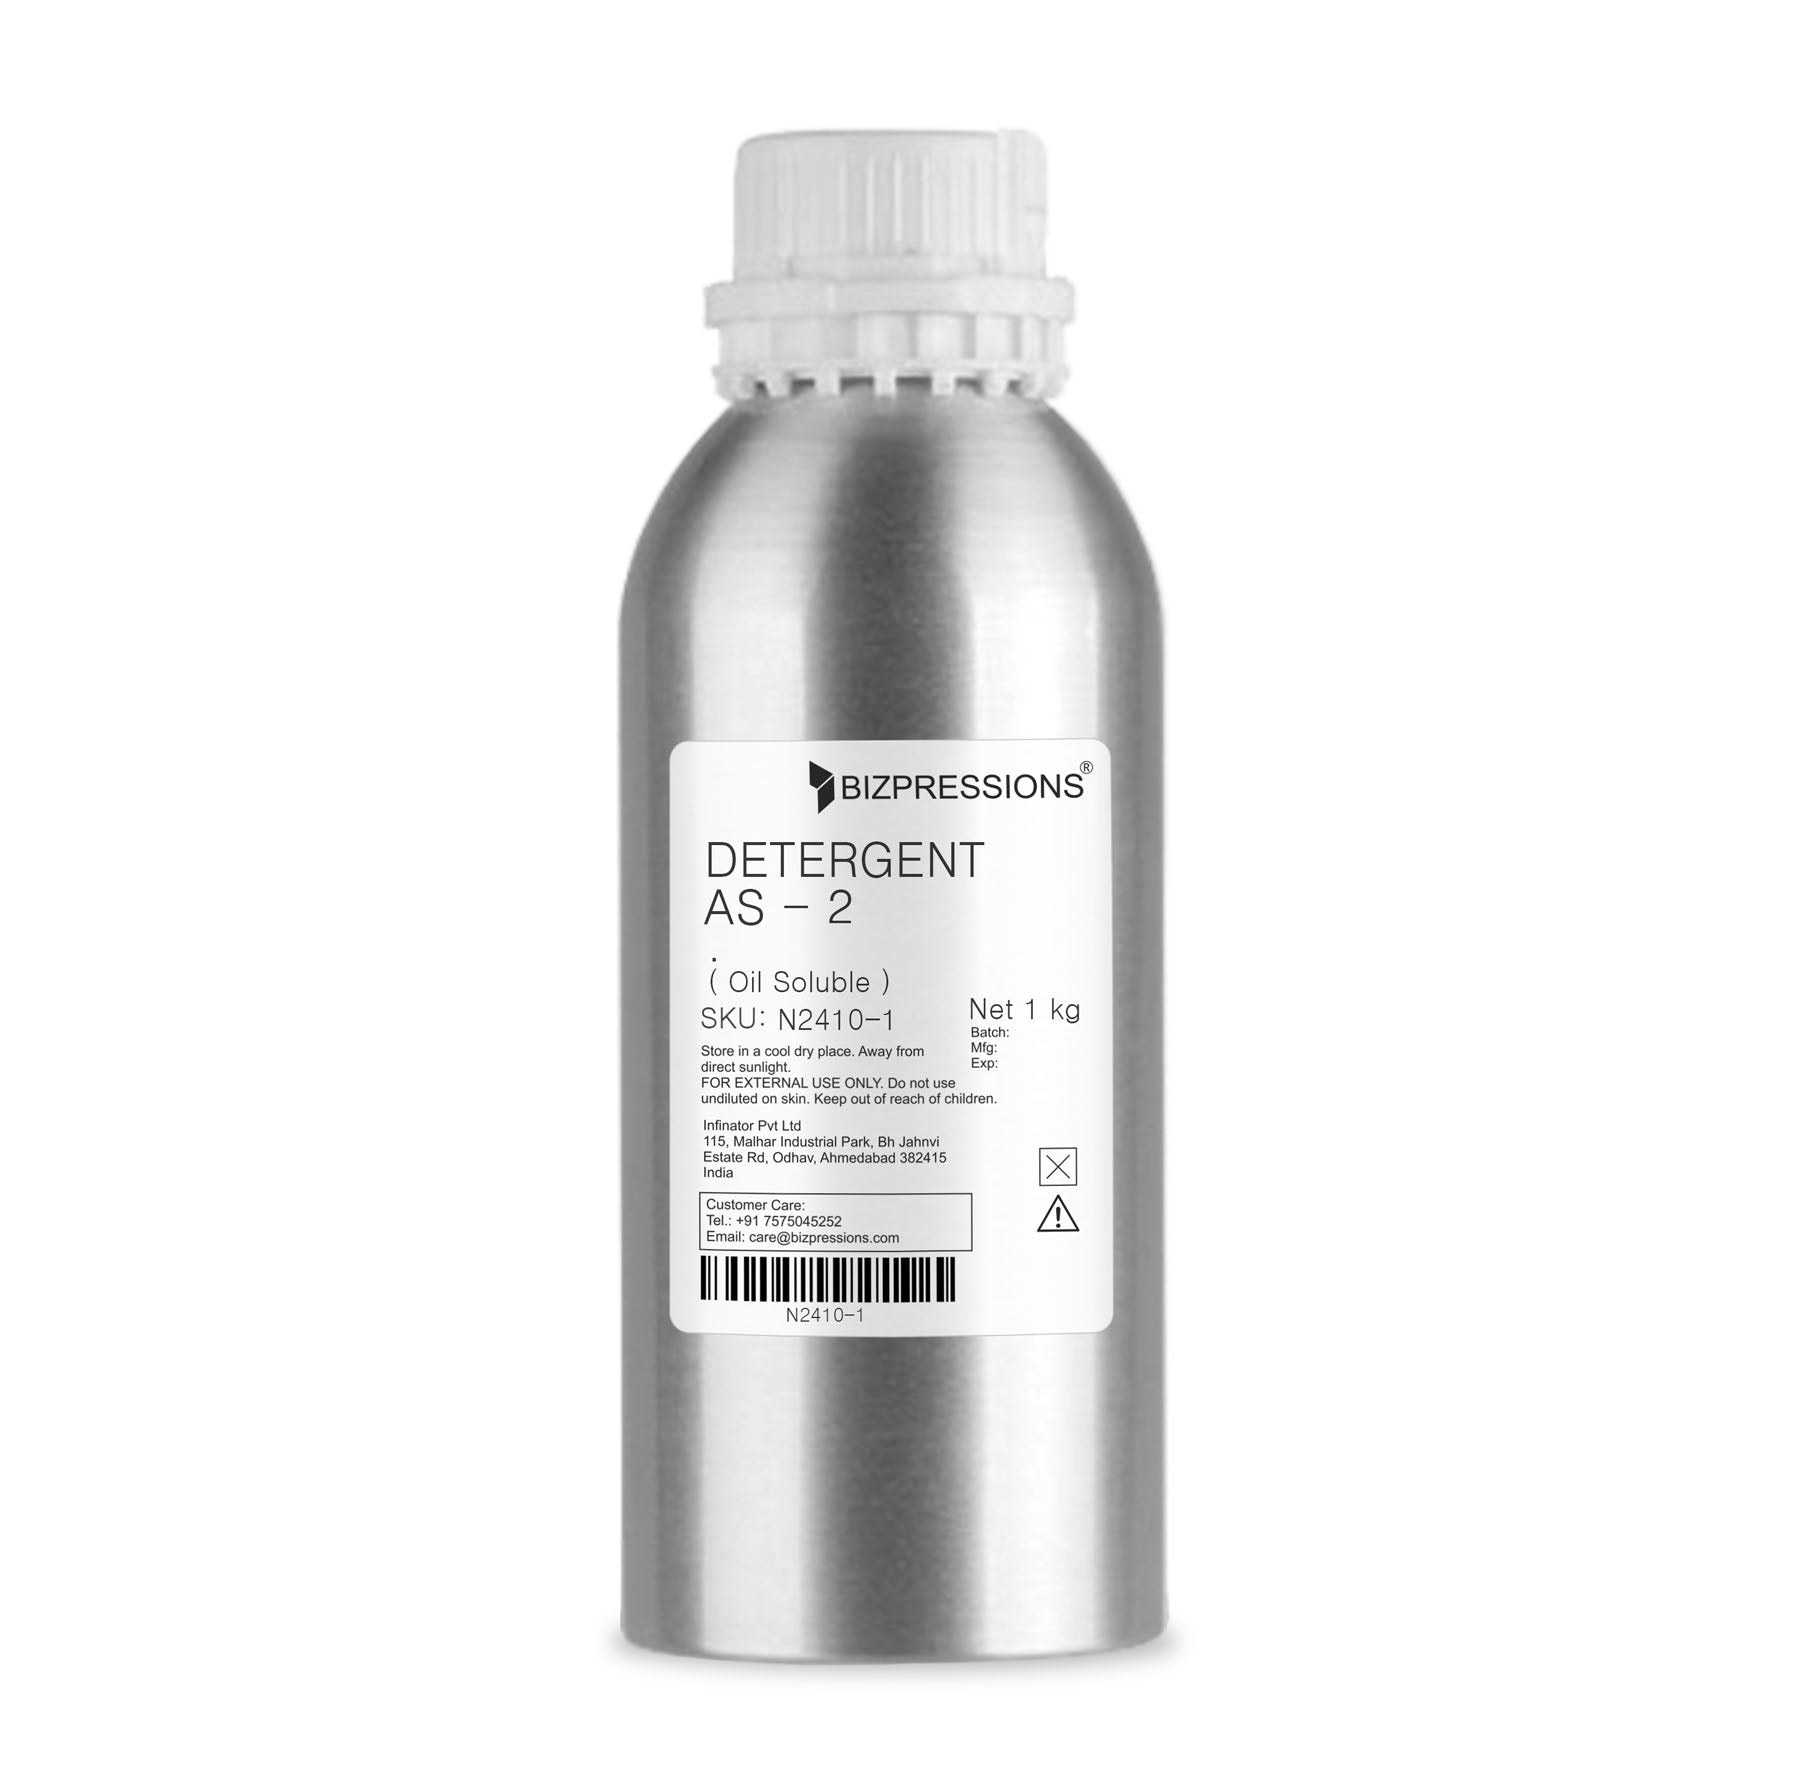 DETERGENT AS - 2 - Fragrance ( Oil Soluble ) - 1 kg